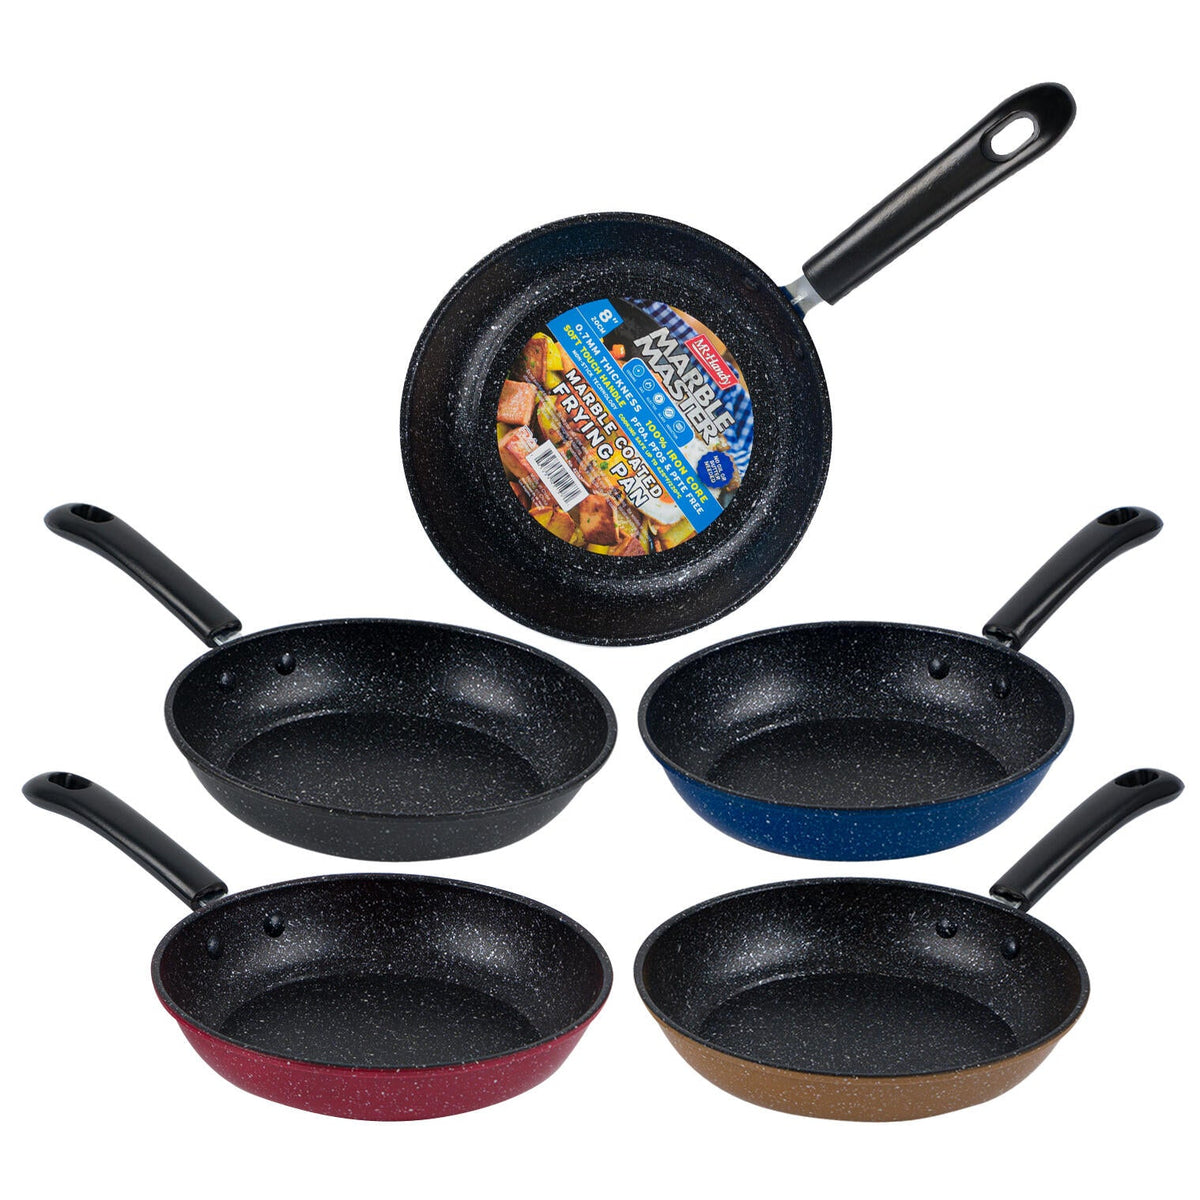 Mr. Handy Marble Coating Frying Pan w/ Black Handle - 8 (Pieces